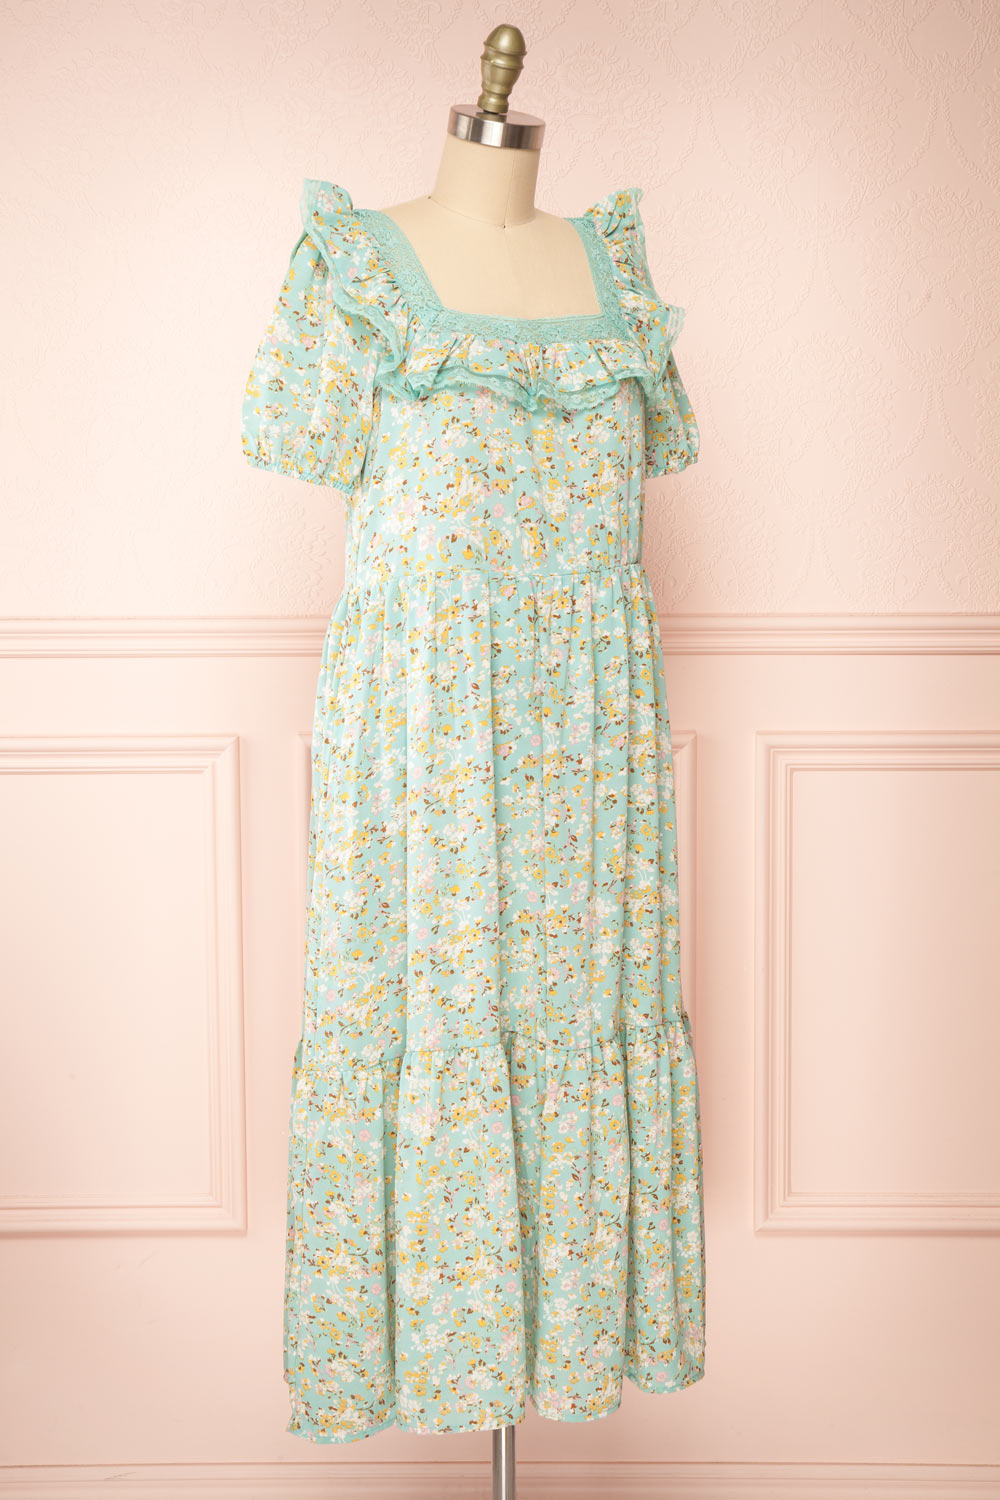 Oydis Mint Floral Midi Dress w/ Square Neck | Boutique 1861  side view